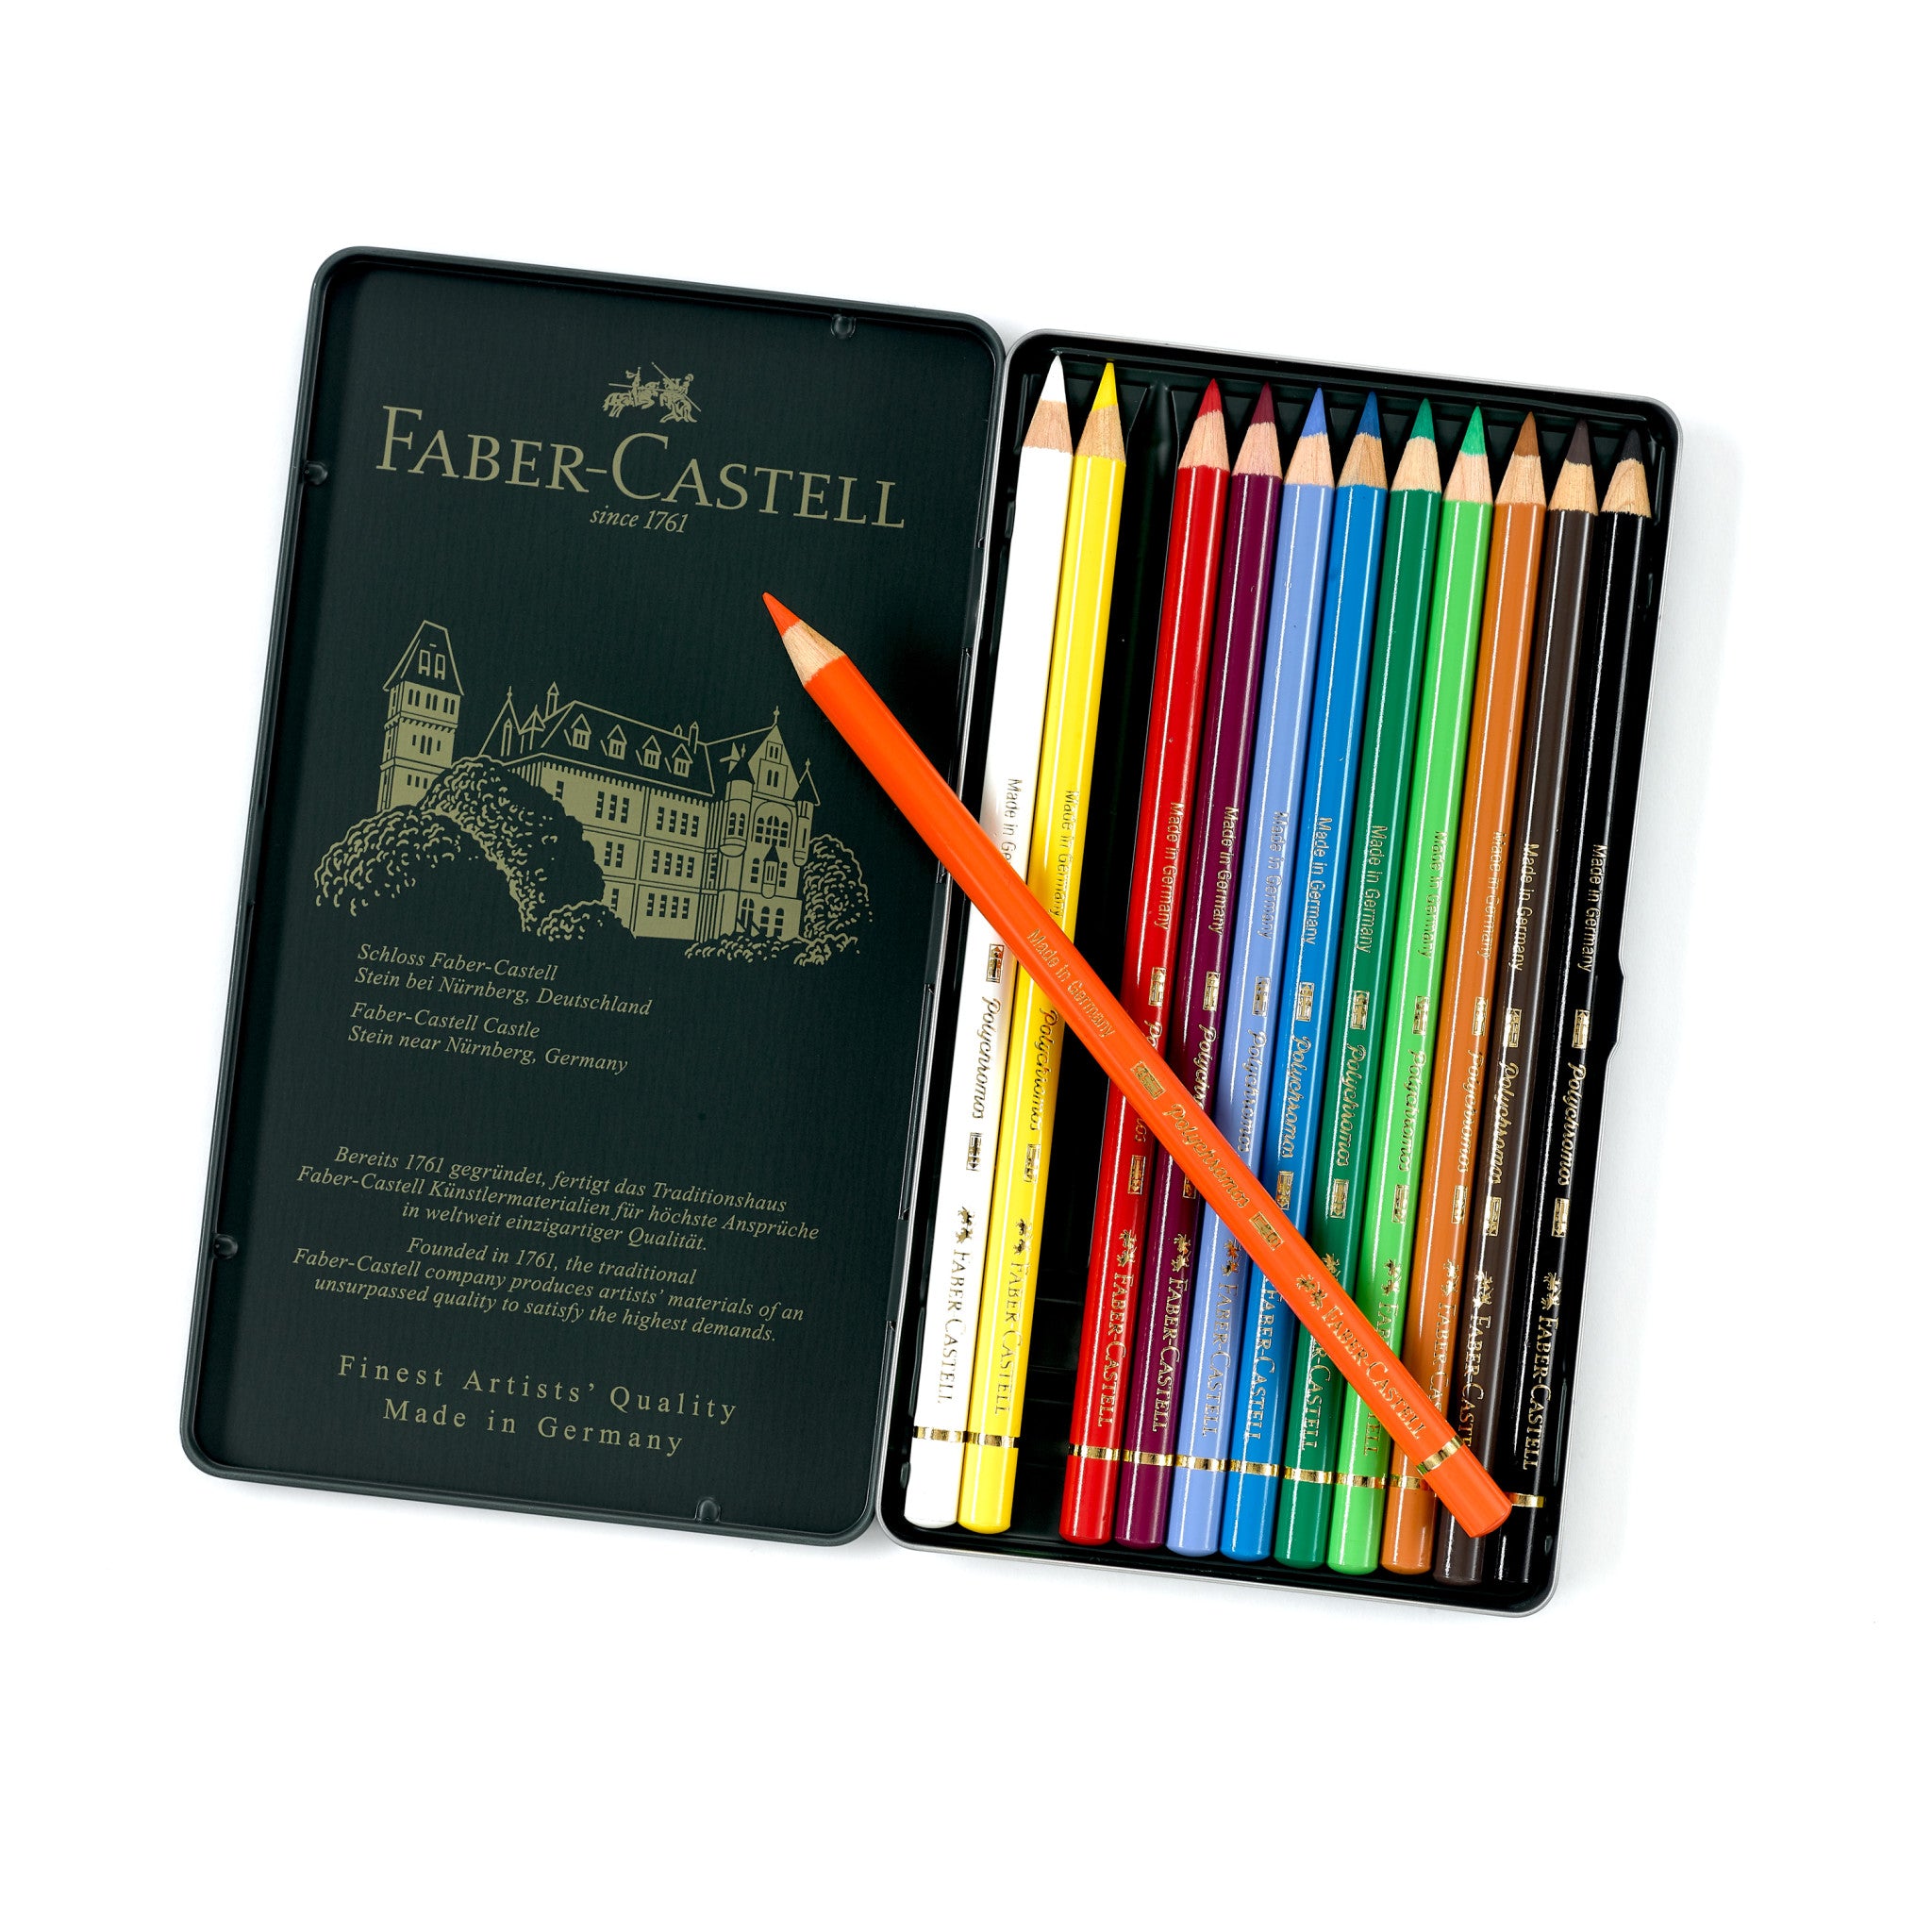 Polychromos Artists' Color Pencils, Tin of 24 Plus 2 more! • John